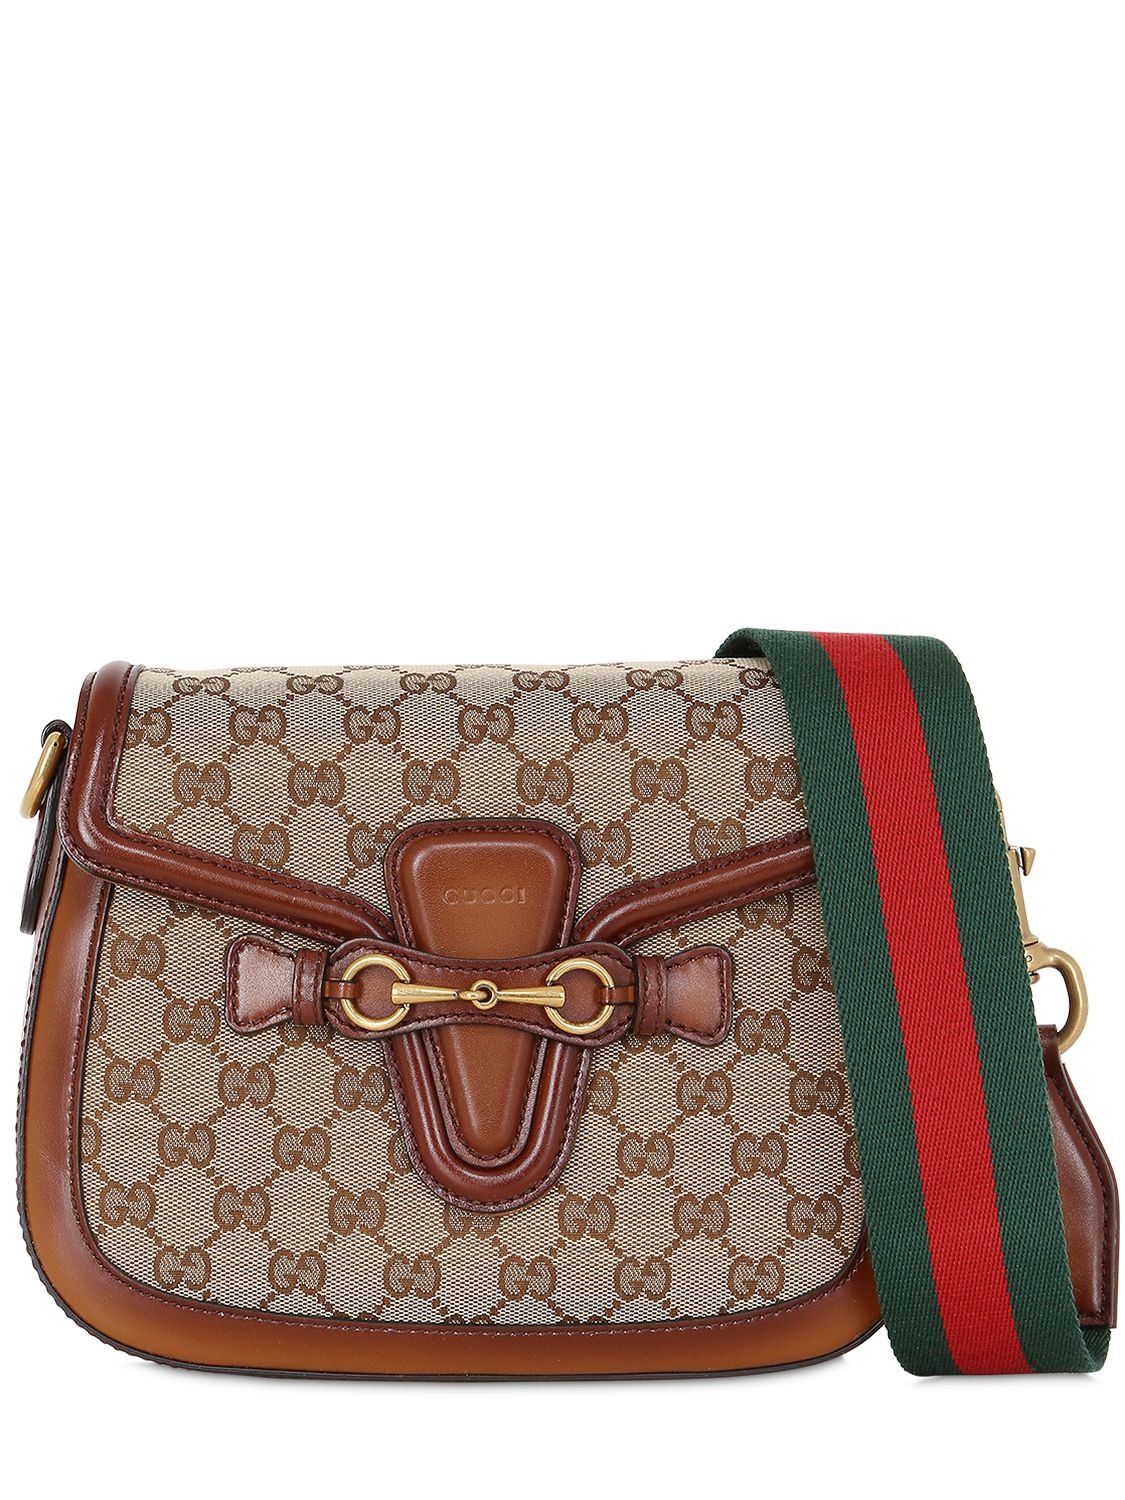 Lyst - Gucci Medium Lady Web Gg Supreme Shoulder Bag in Brown